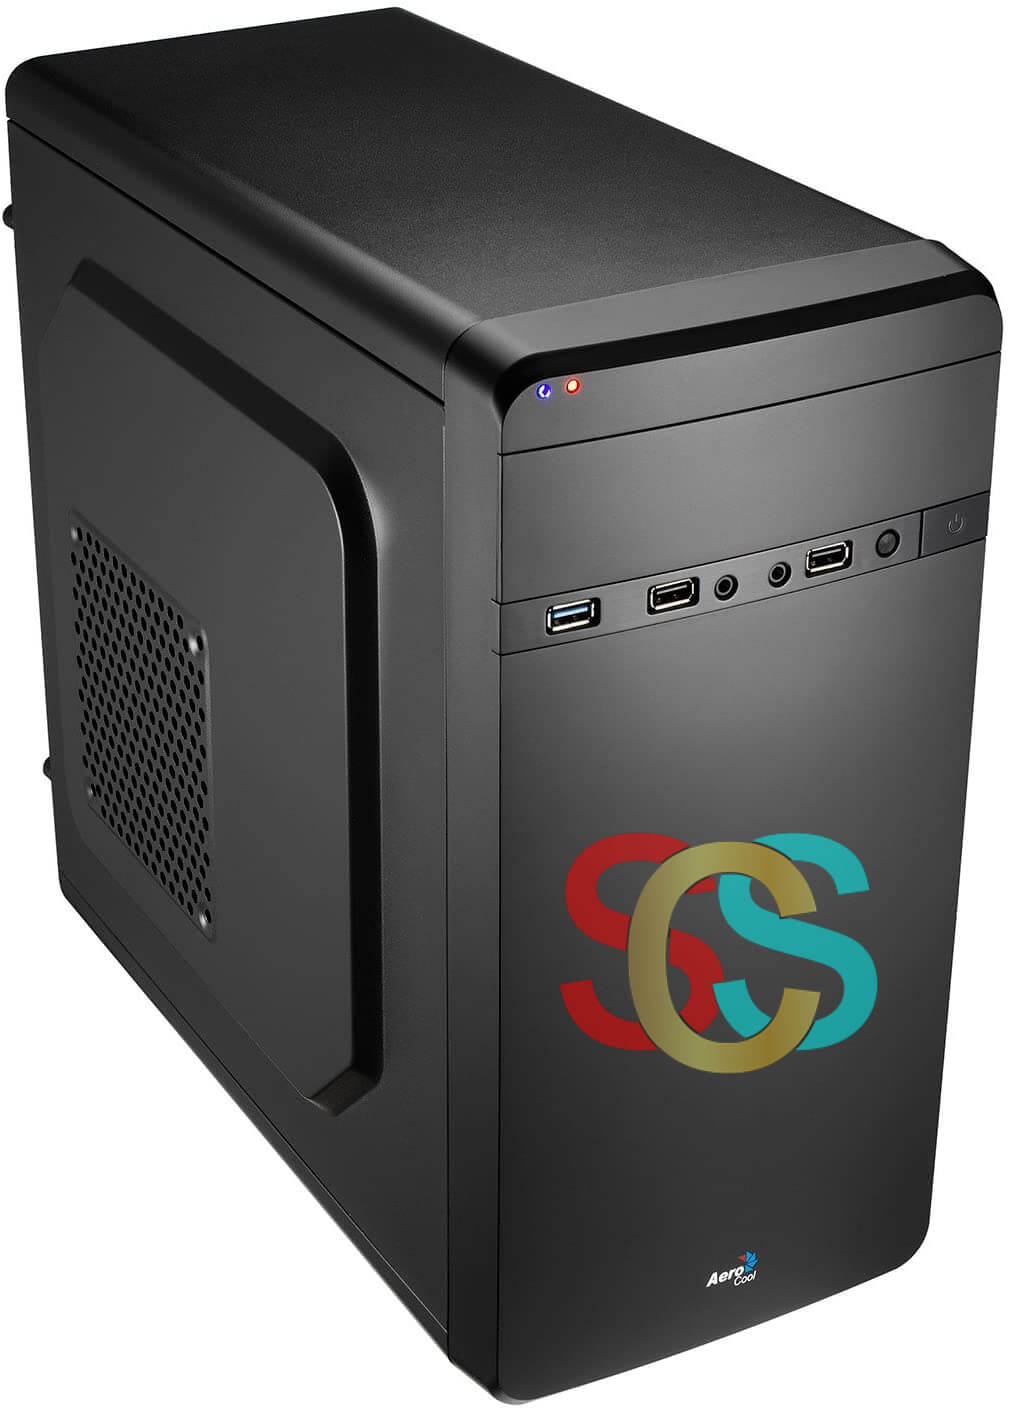 PC Power 180O Mid Tower Black Desktop Case with Standard PSU